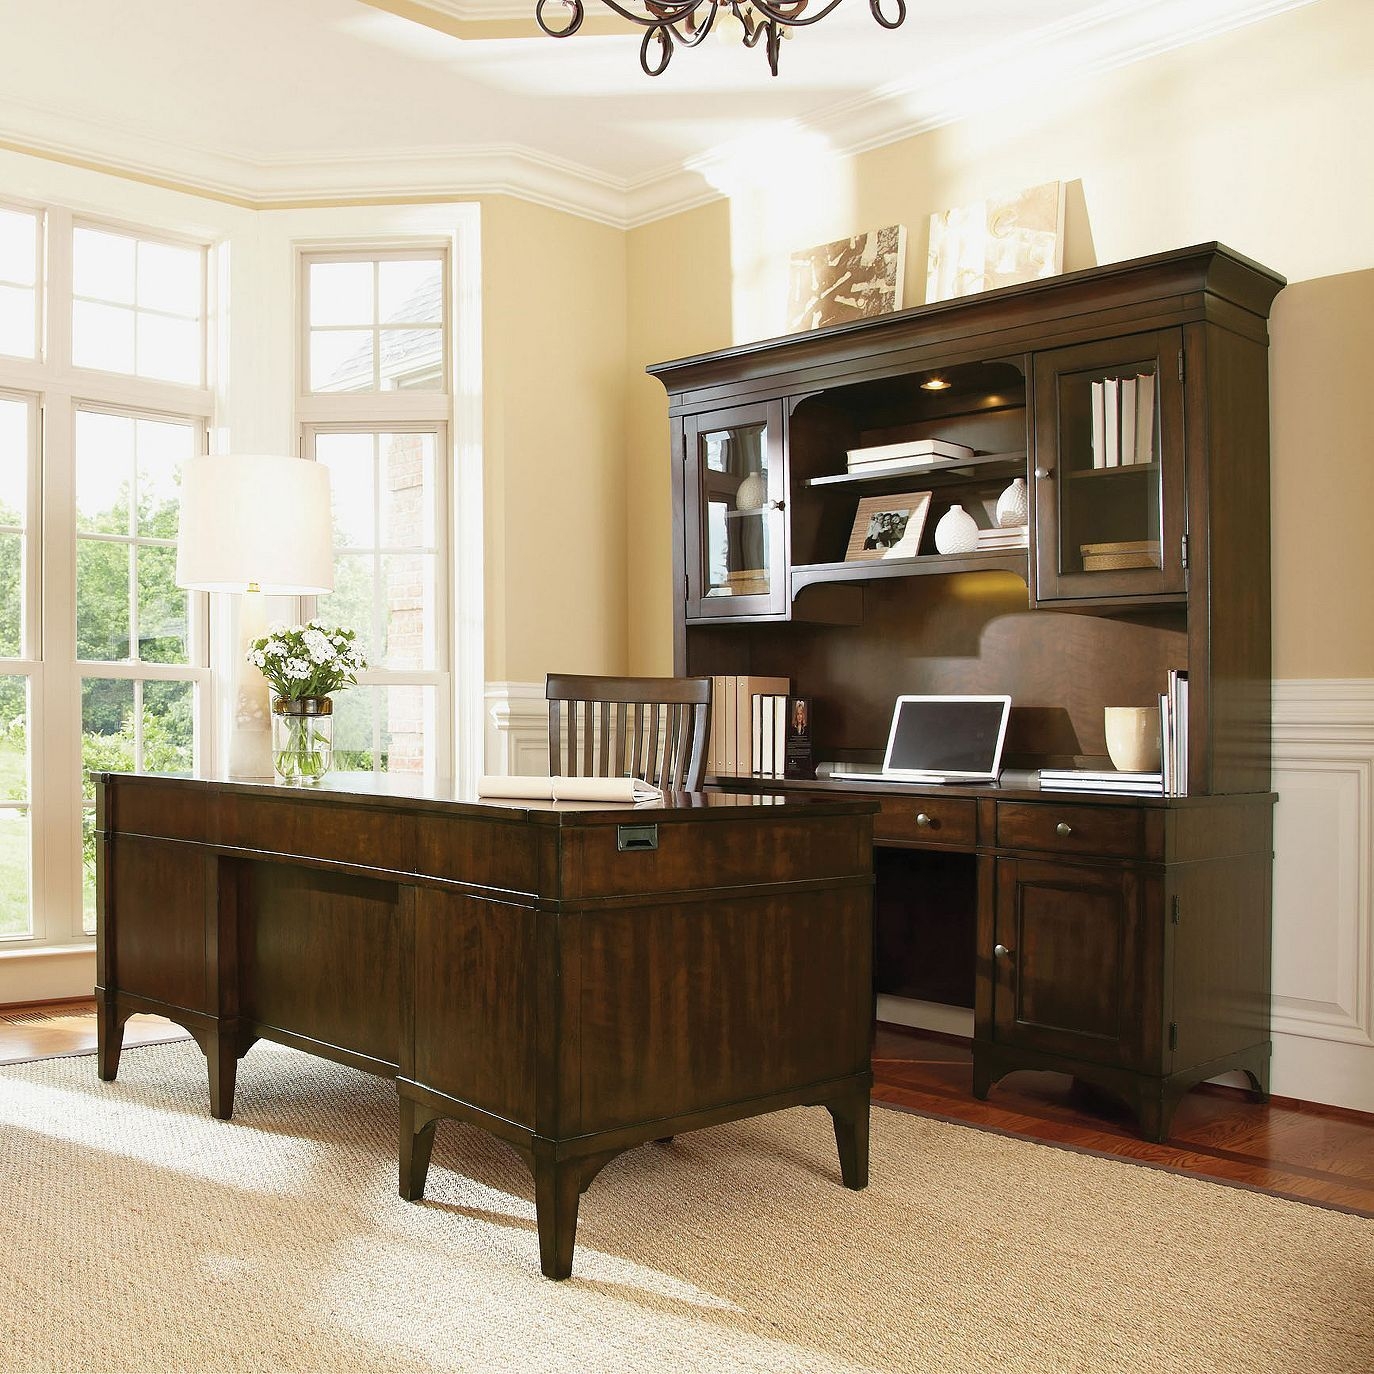 Hooker furniture abbott place 3 piece executive office set